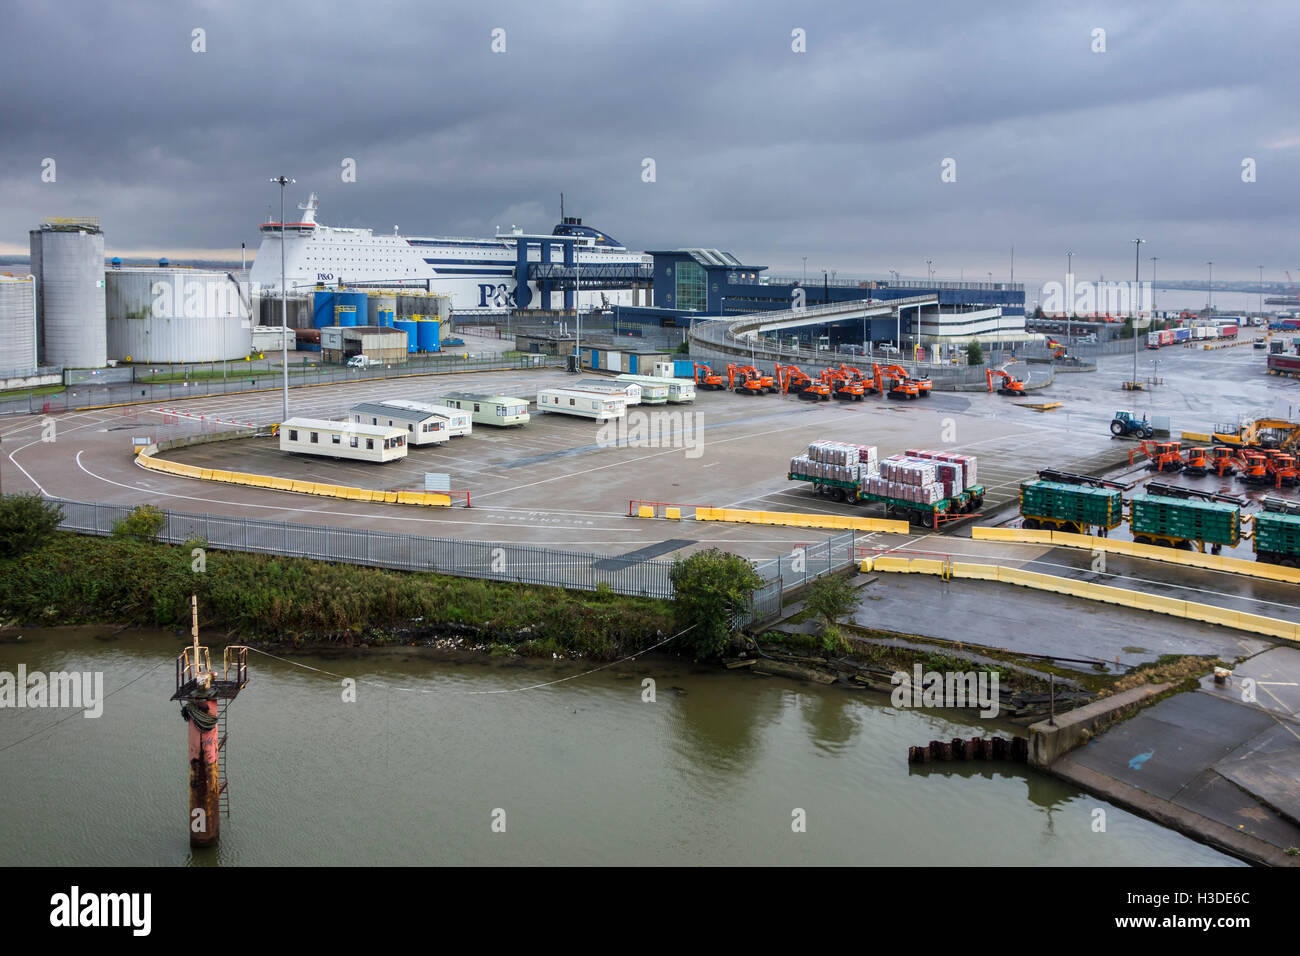 P & O ferry terminal im Hafen von Hull in Kingston upon Hull, England, UK  Stockfotografie - Alamy